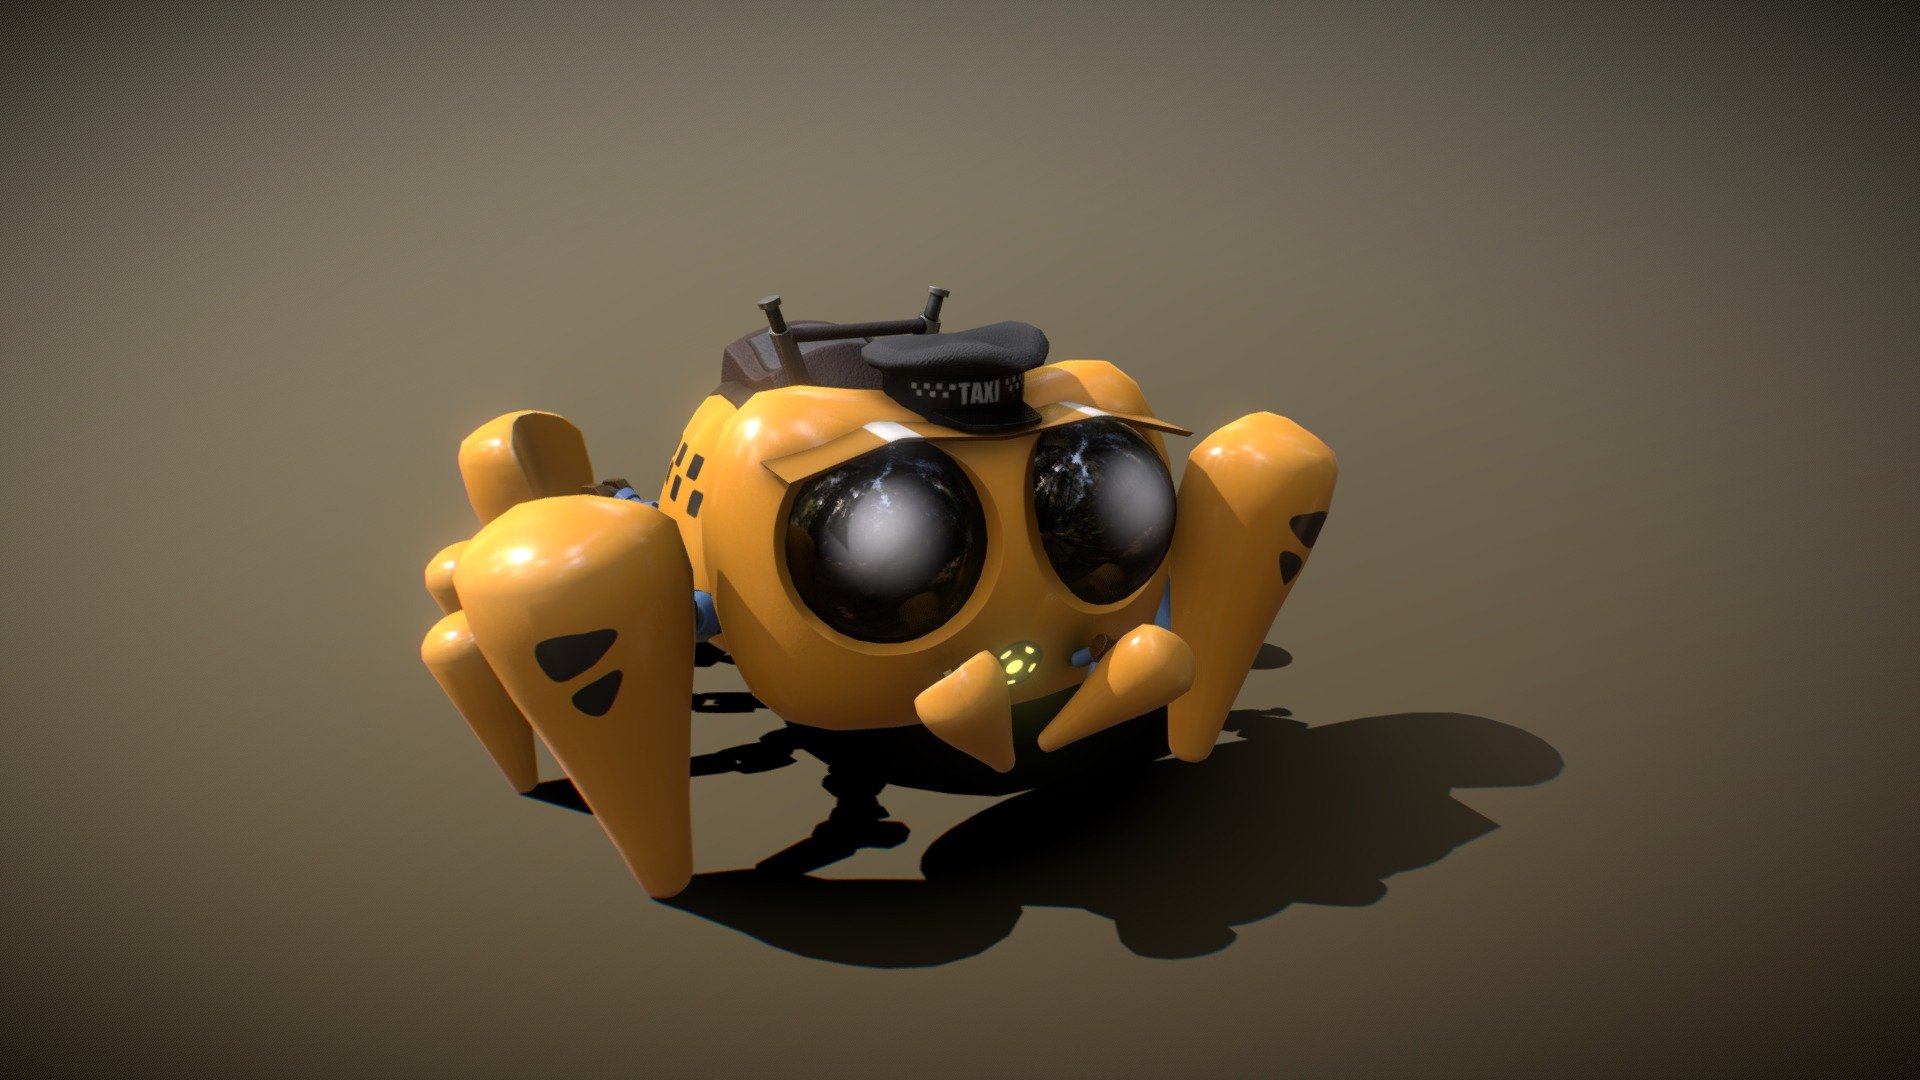 Taxi Spider Bot #CuteRobotChallenge